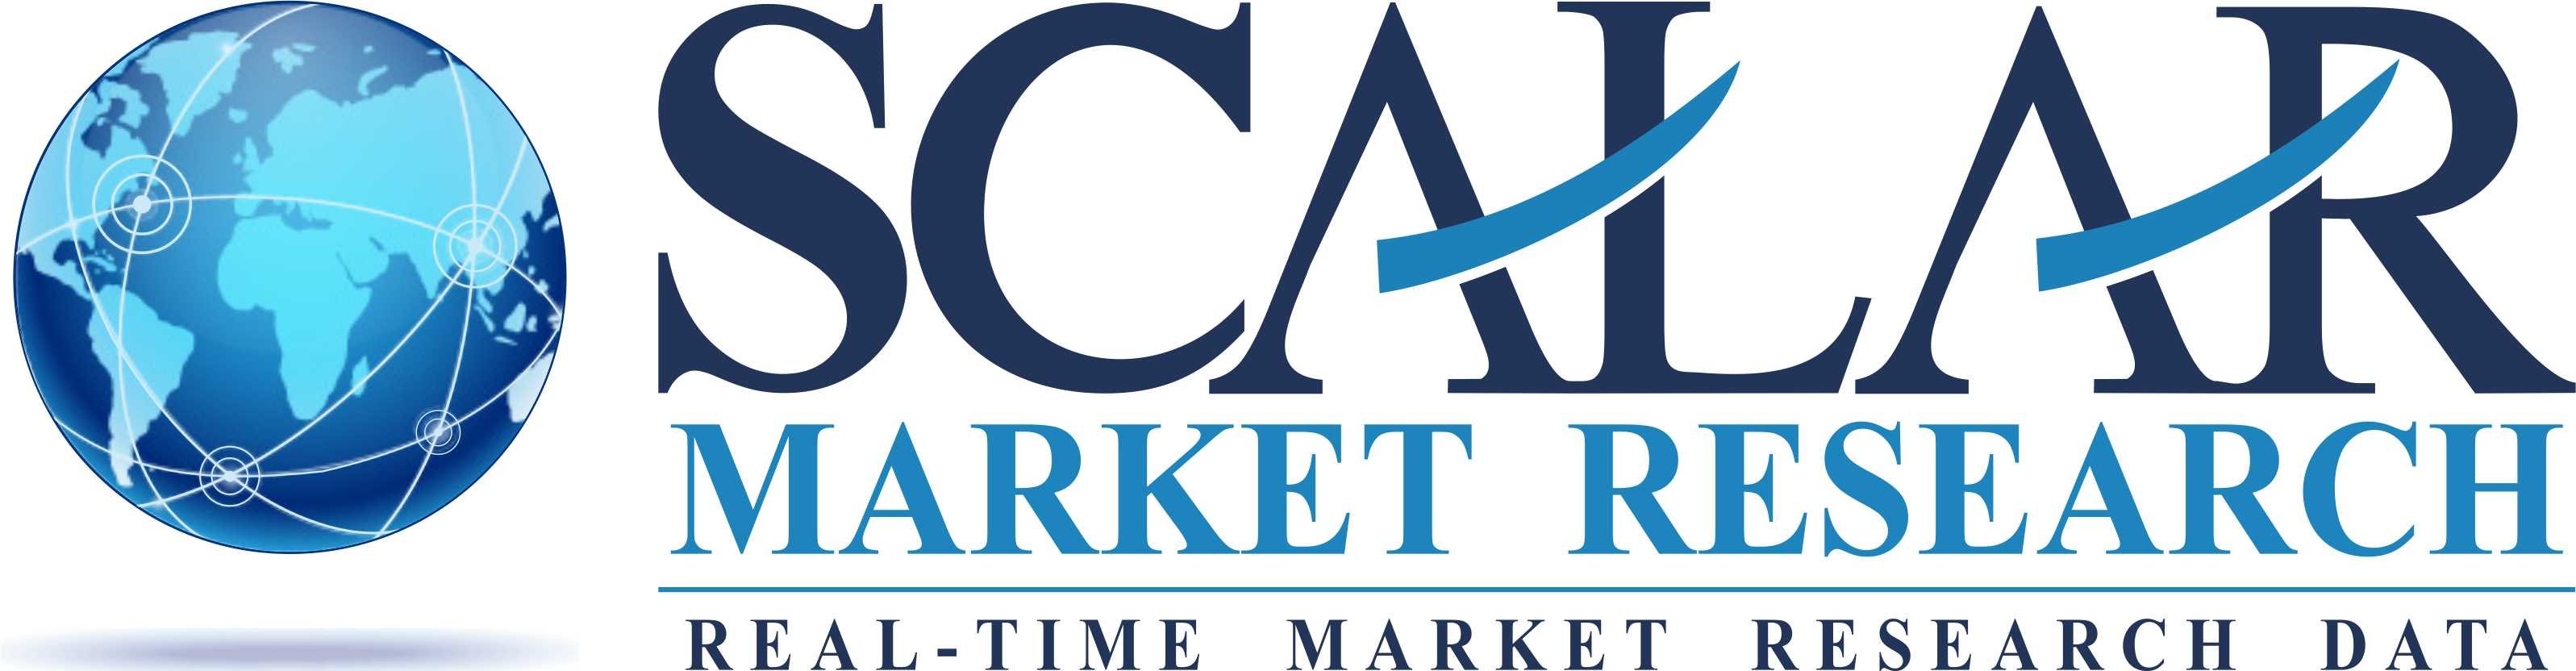 Scalar Market Research Logo